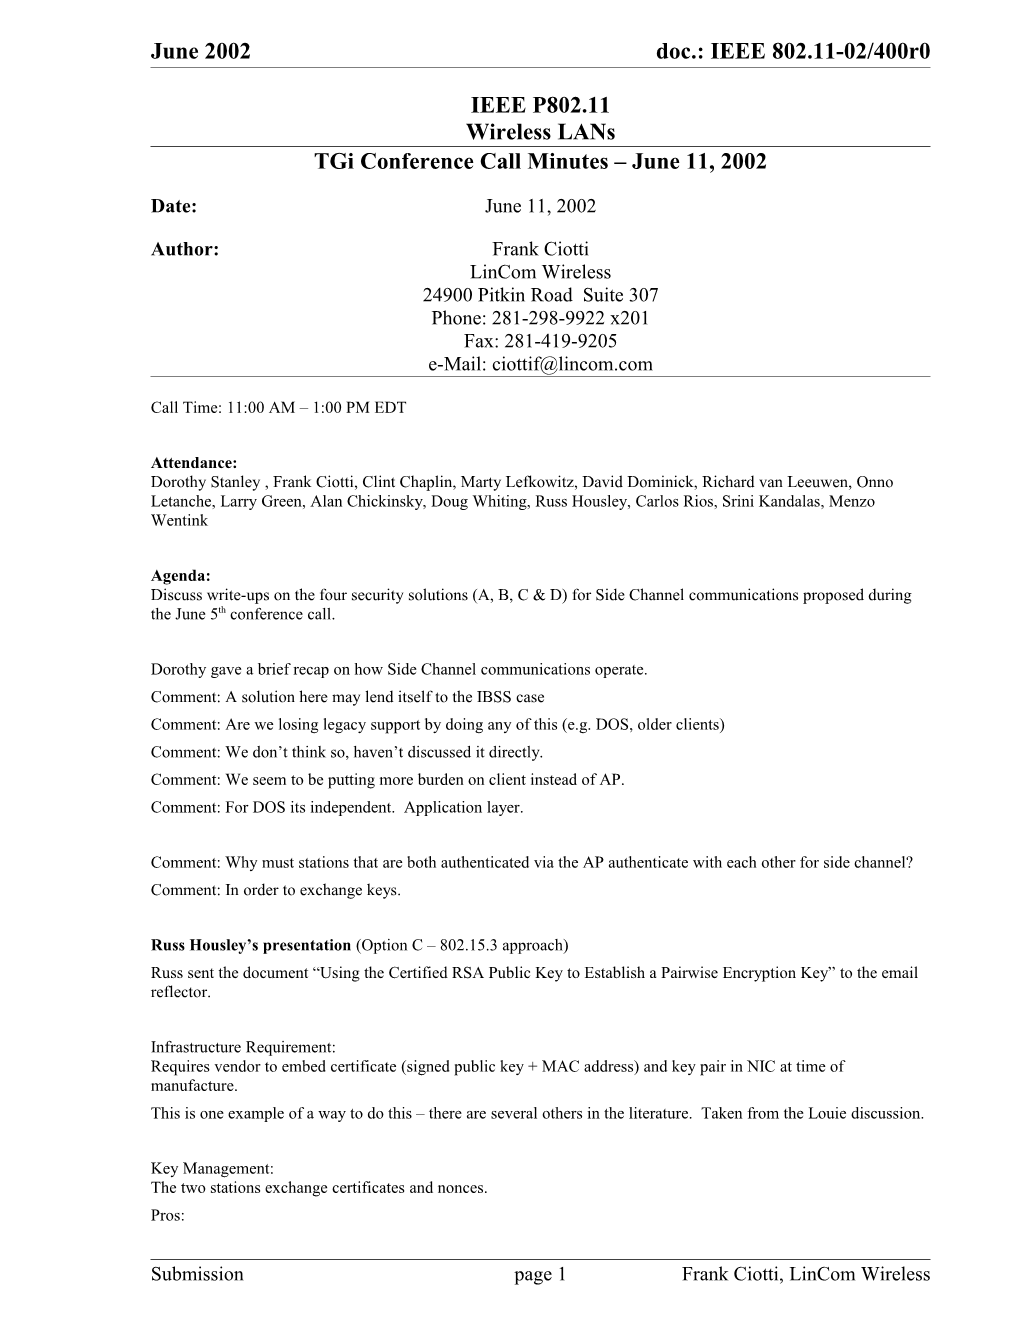 Tgi Conference Call Minutes June 11, 2002